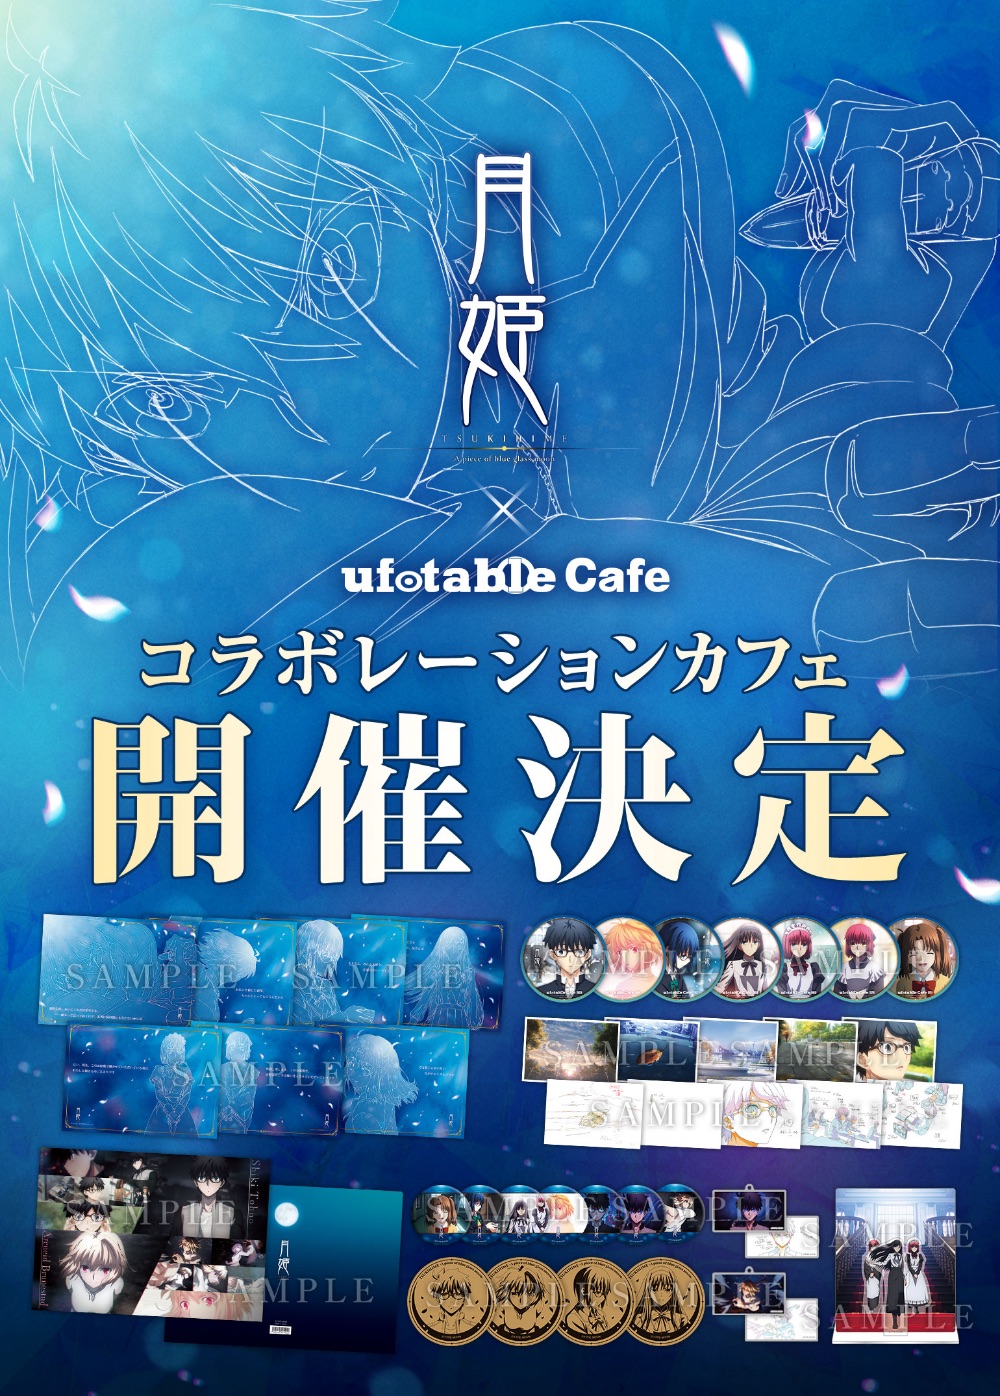 【ufotable Cafe大阪】「月姫 -A piece of blue glass moon-」コラボレーションカフェ